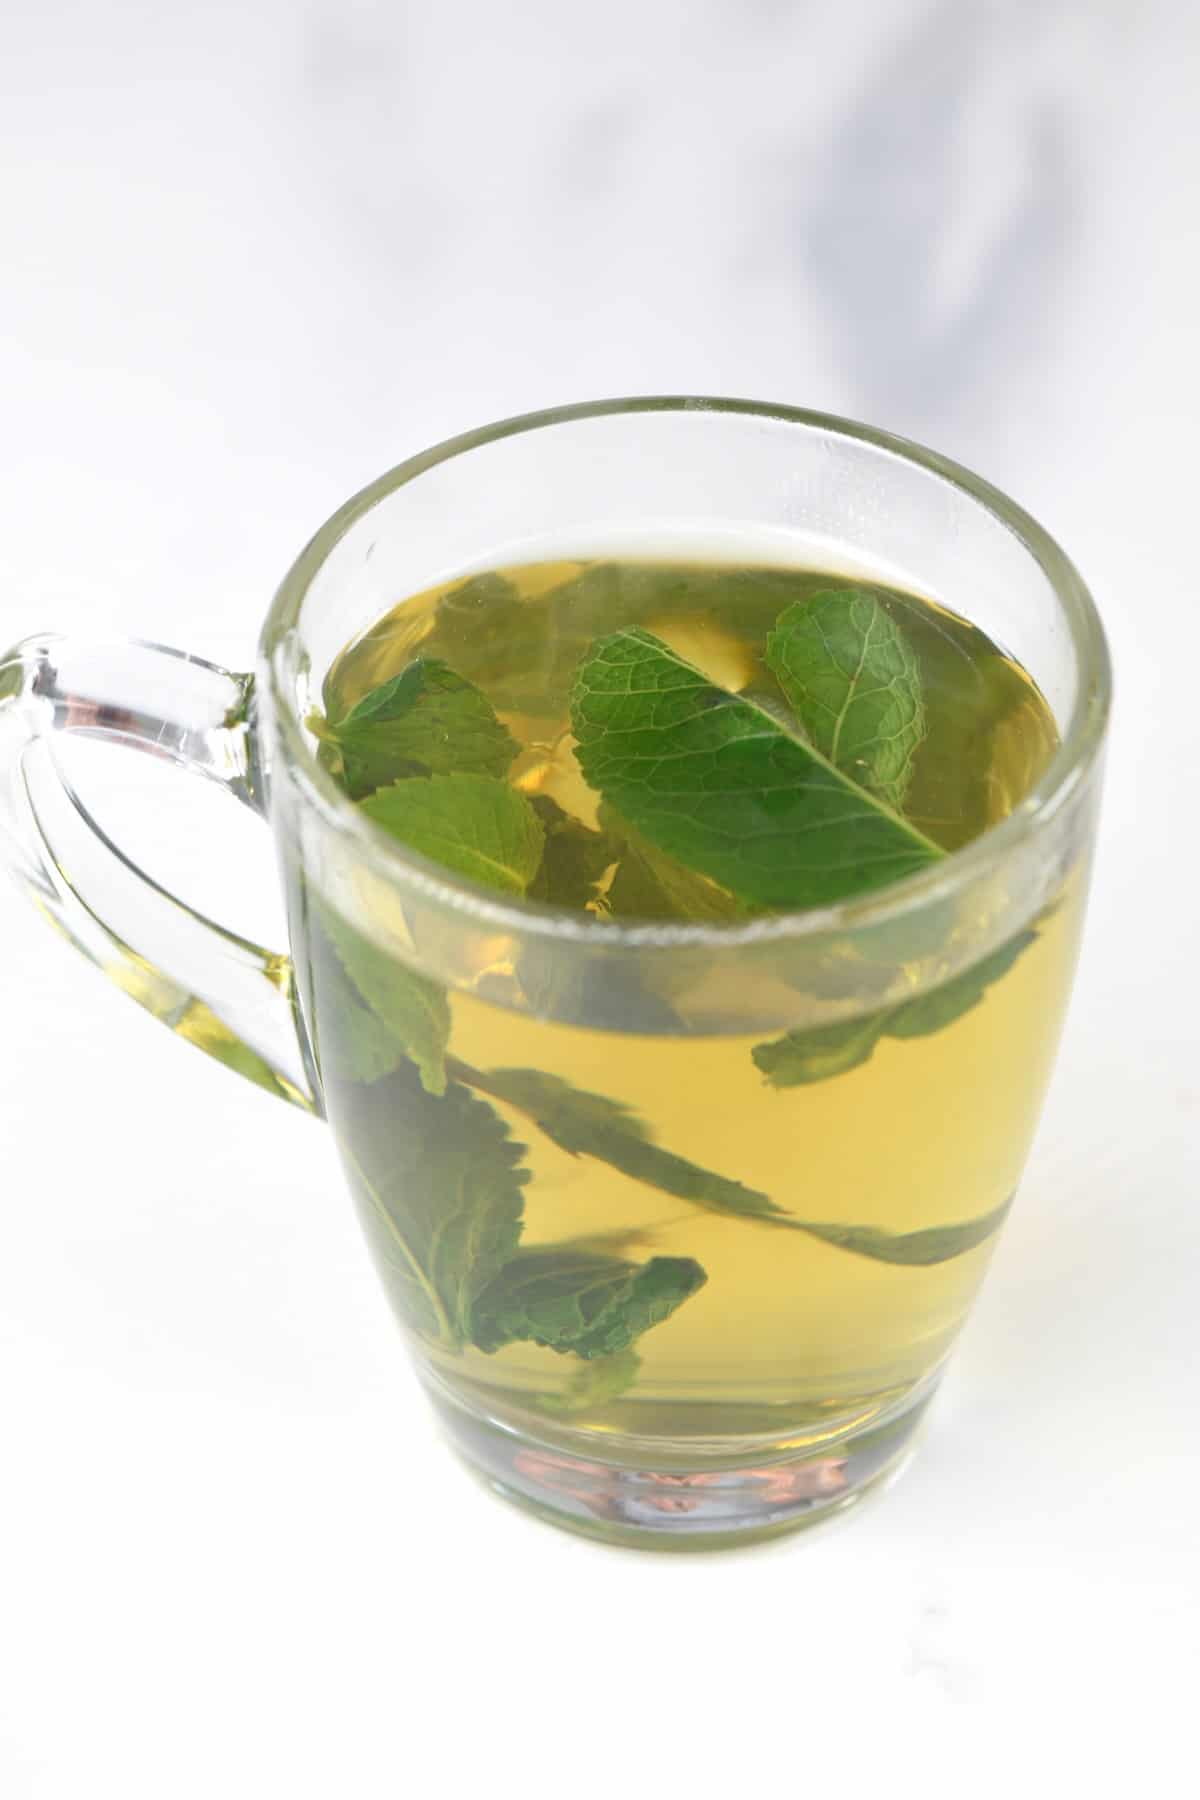 6 Health Benefits of Spearmint Tea & 2 Tips - Tartelette